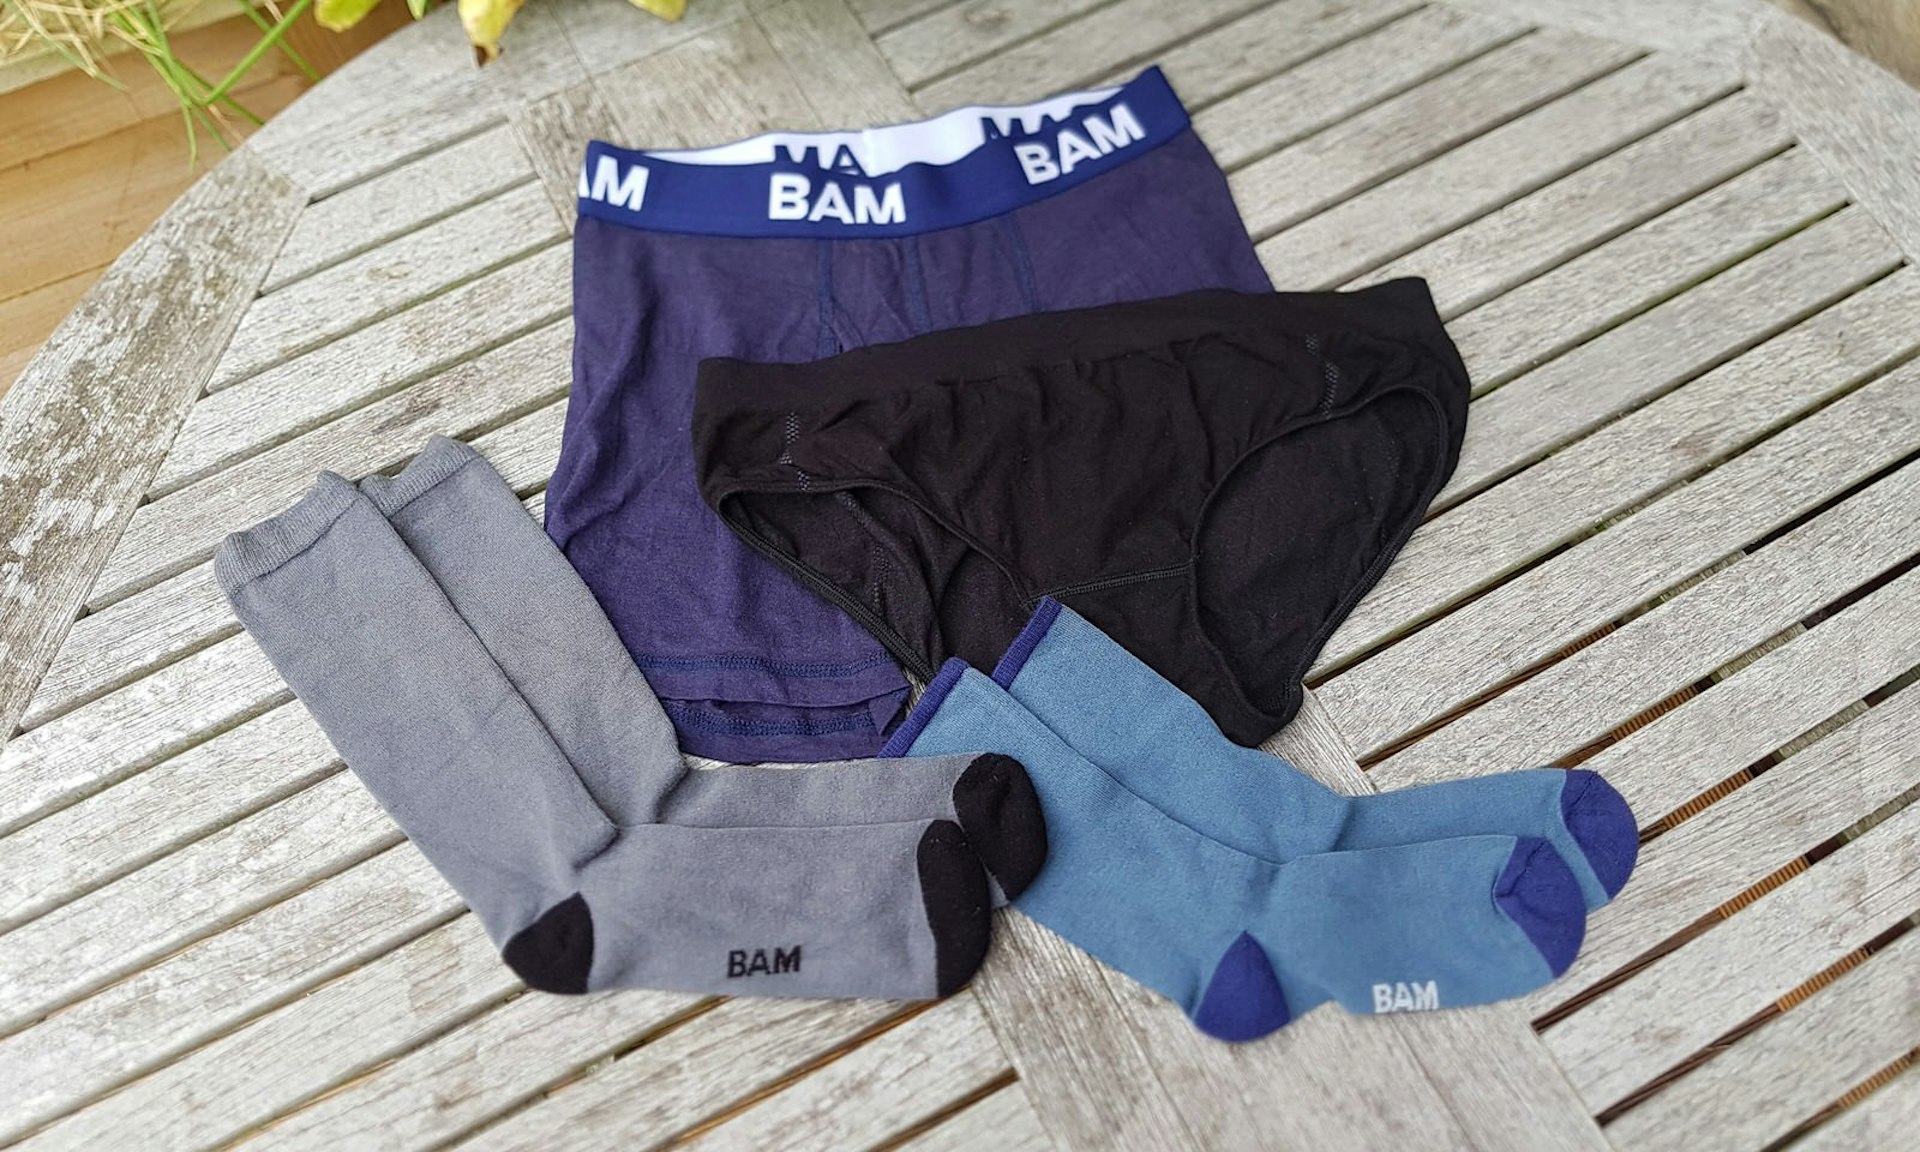 BAM Bamboo socks and underwear